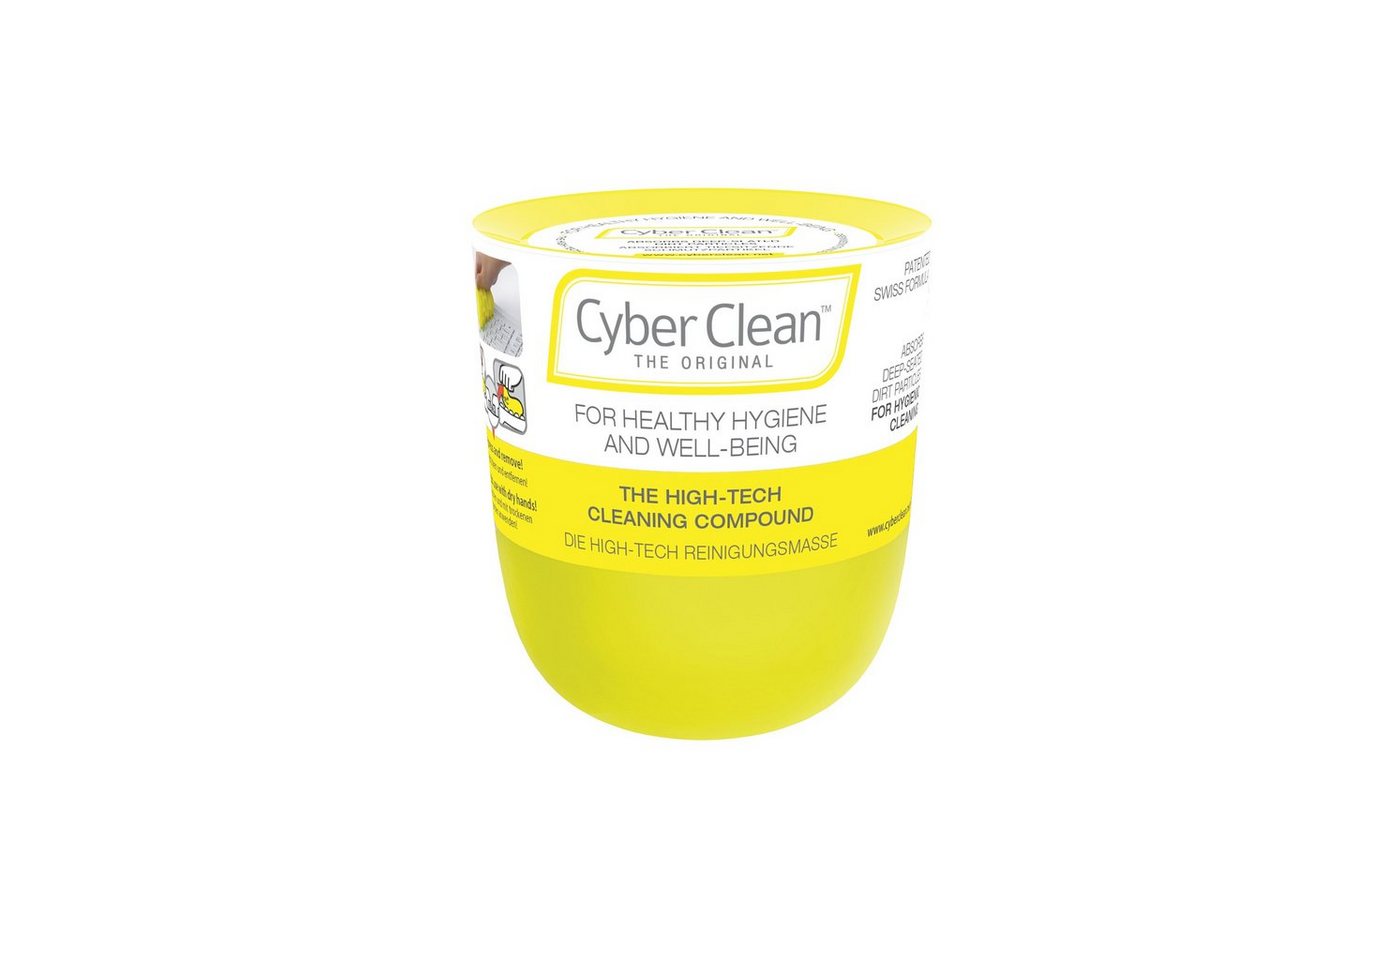 CyberClean CyberClean Home & Office Cup 160g Reinigungsmittel Reinigungsmasse von CyberClean